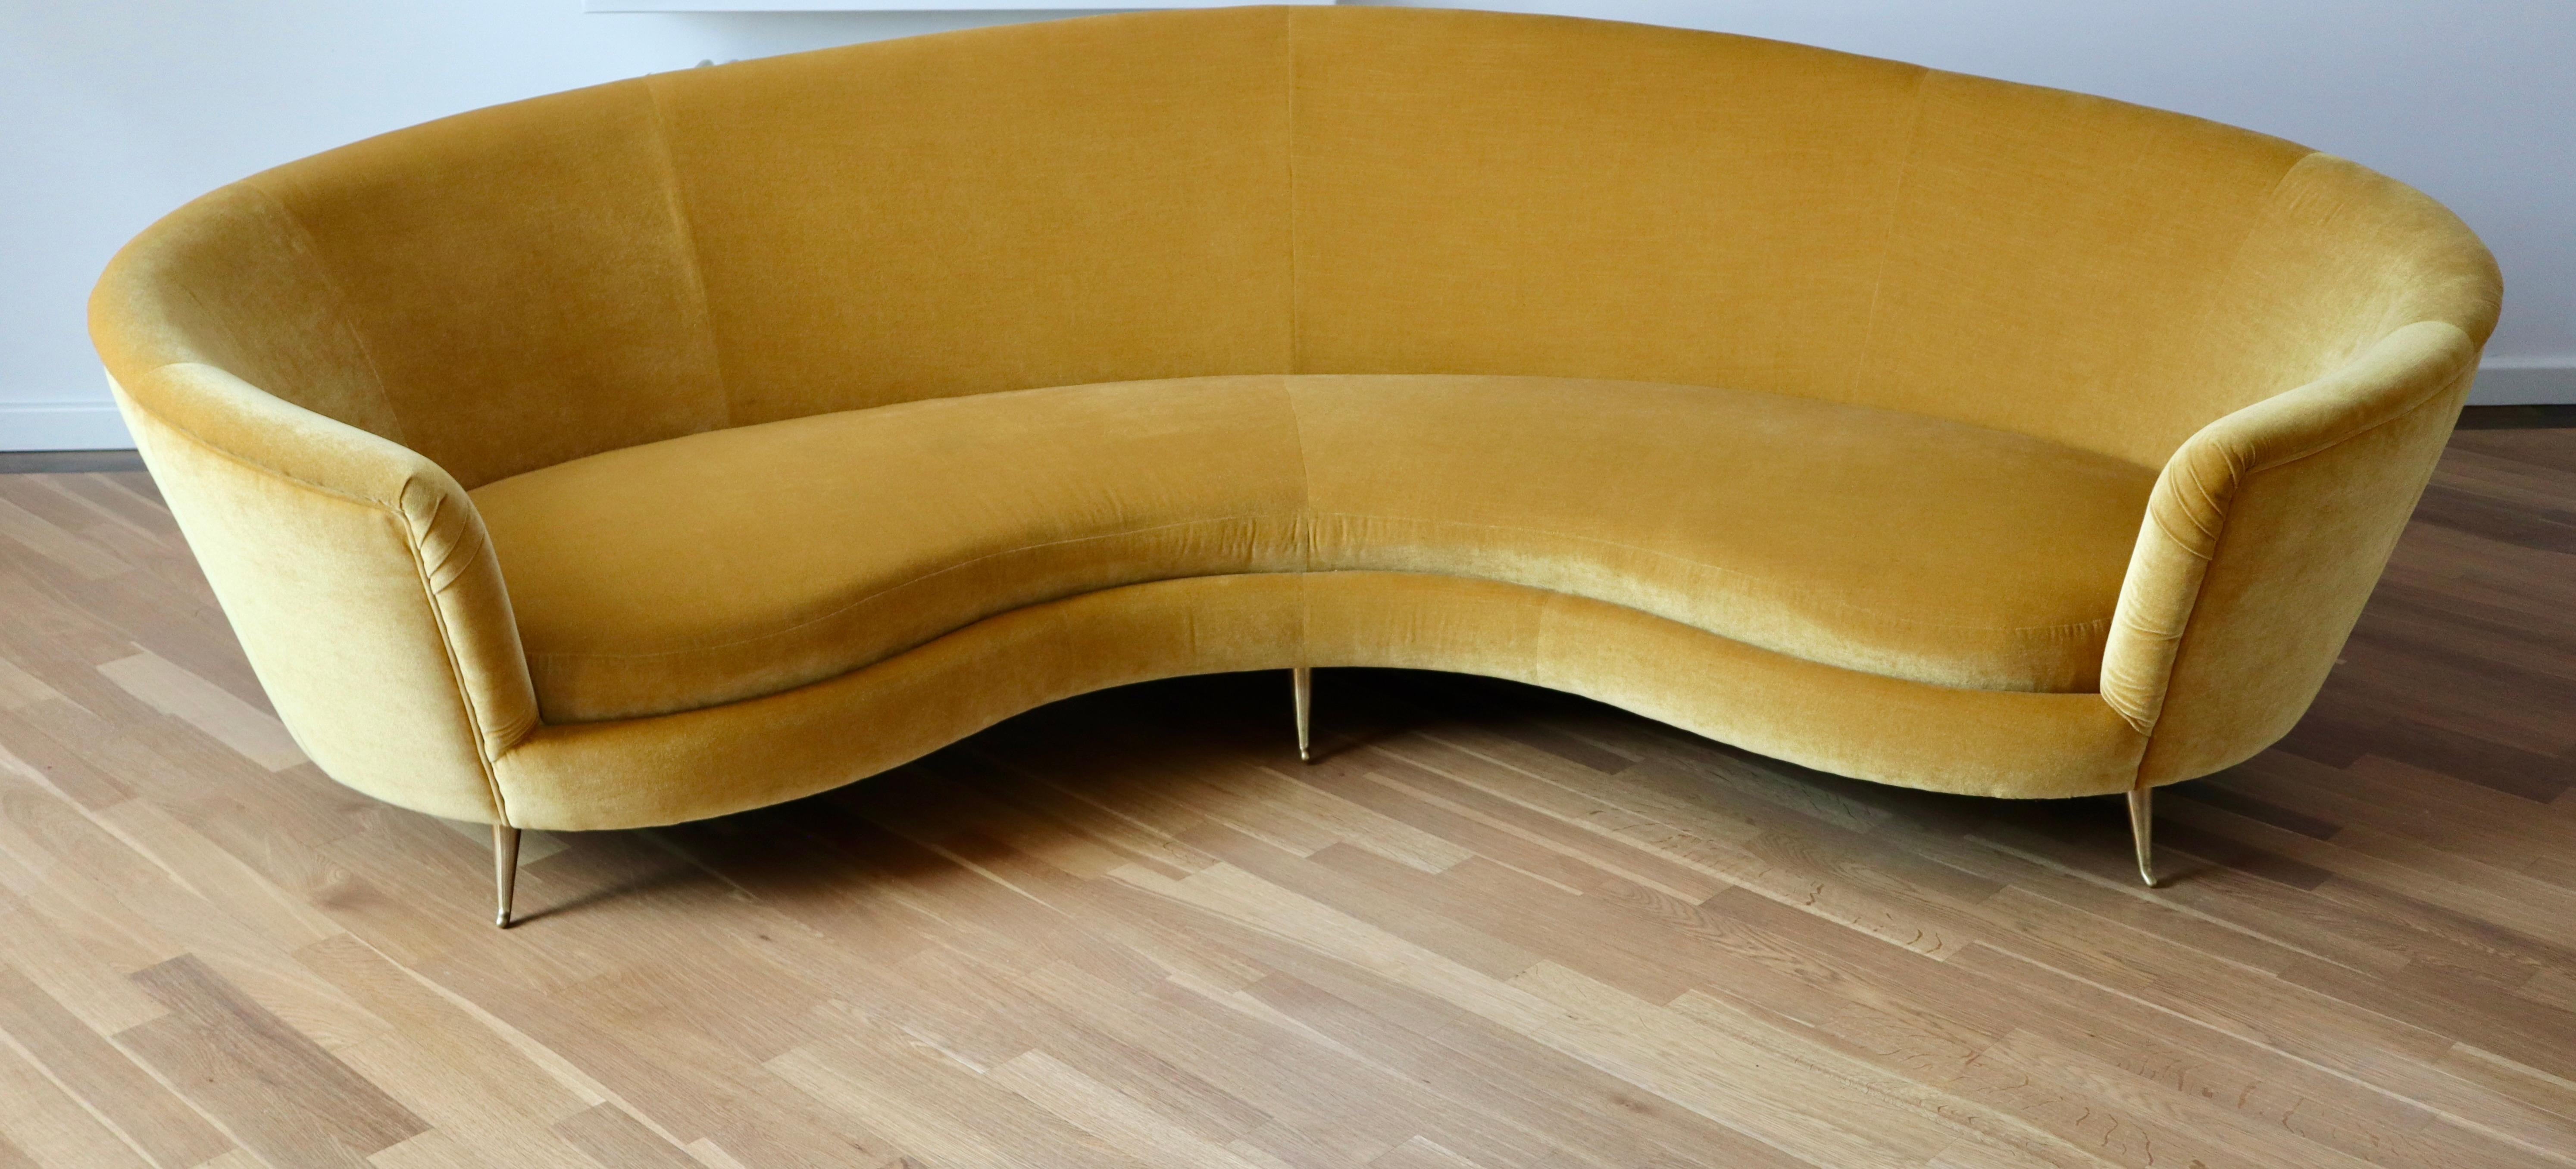 XXIe siècle et contemporain XXL Gio Ponti Style Large Mid Century Modern Italian Crescent Canapé Sofa en vente